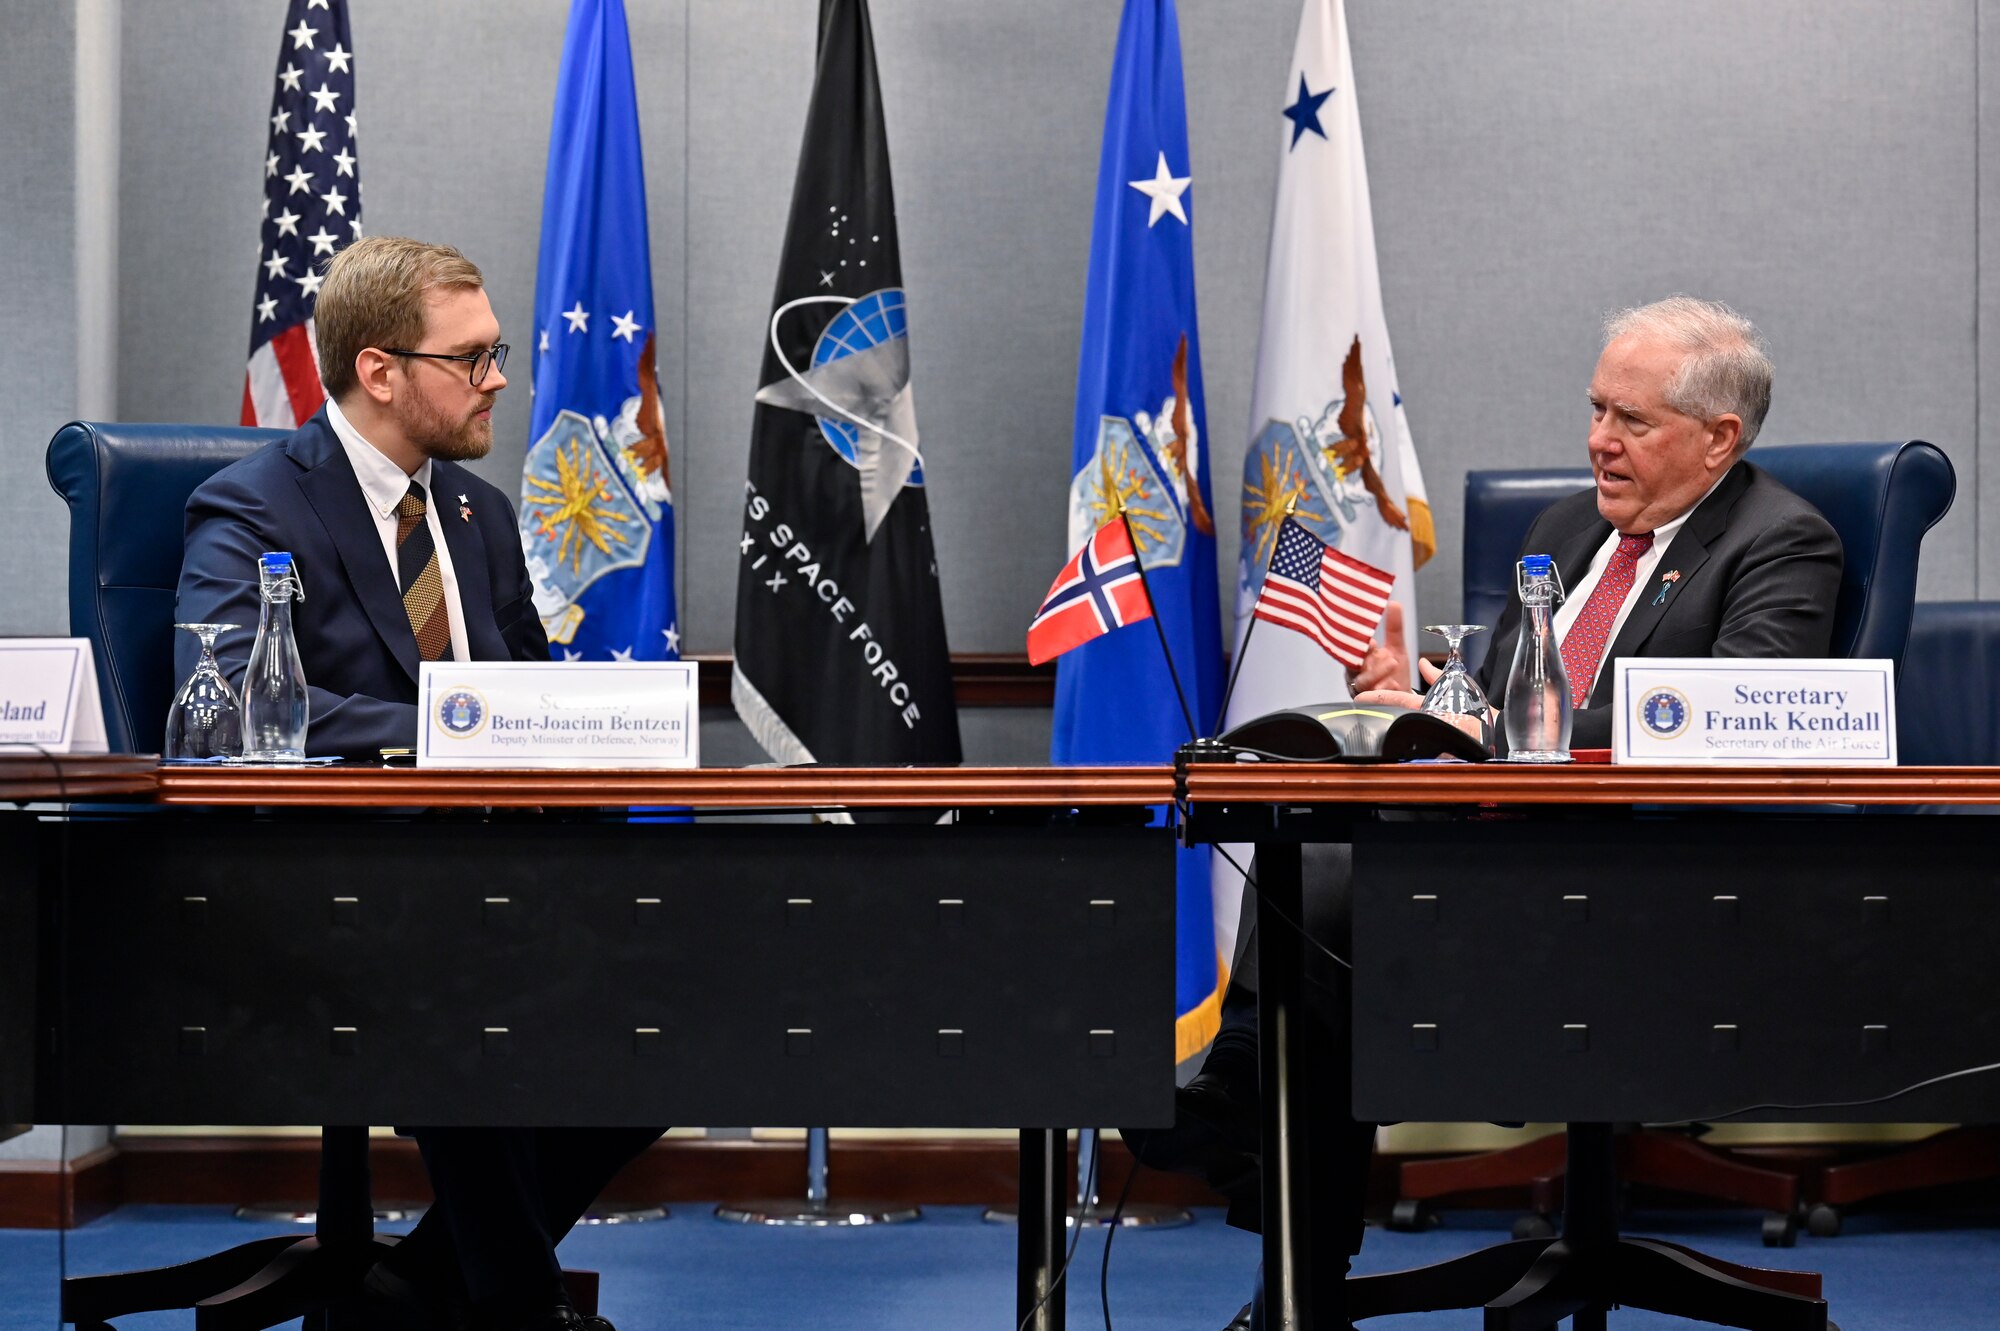 Secretary of the Air Force Frank Kendall speaks with Norwegian State Secretary Bent-Joacim Bentzen.